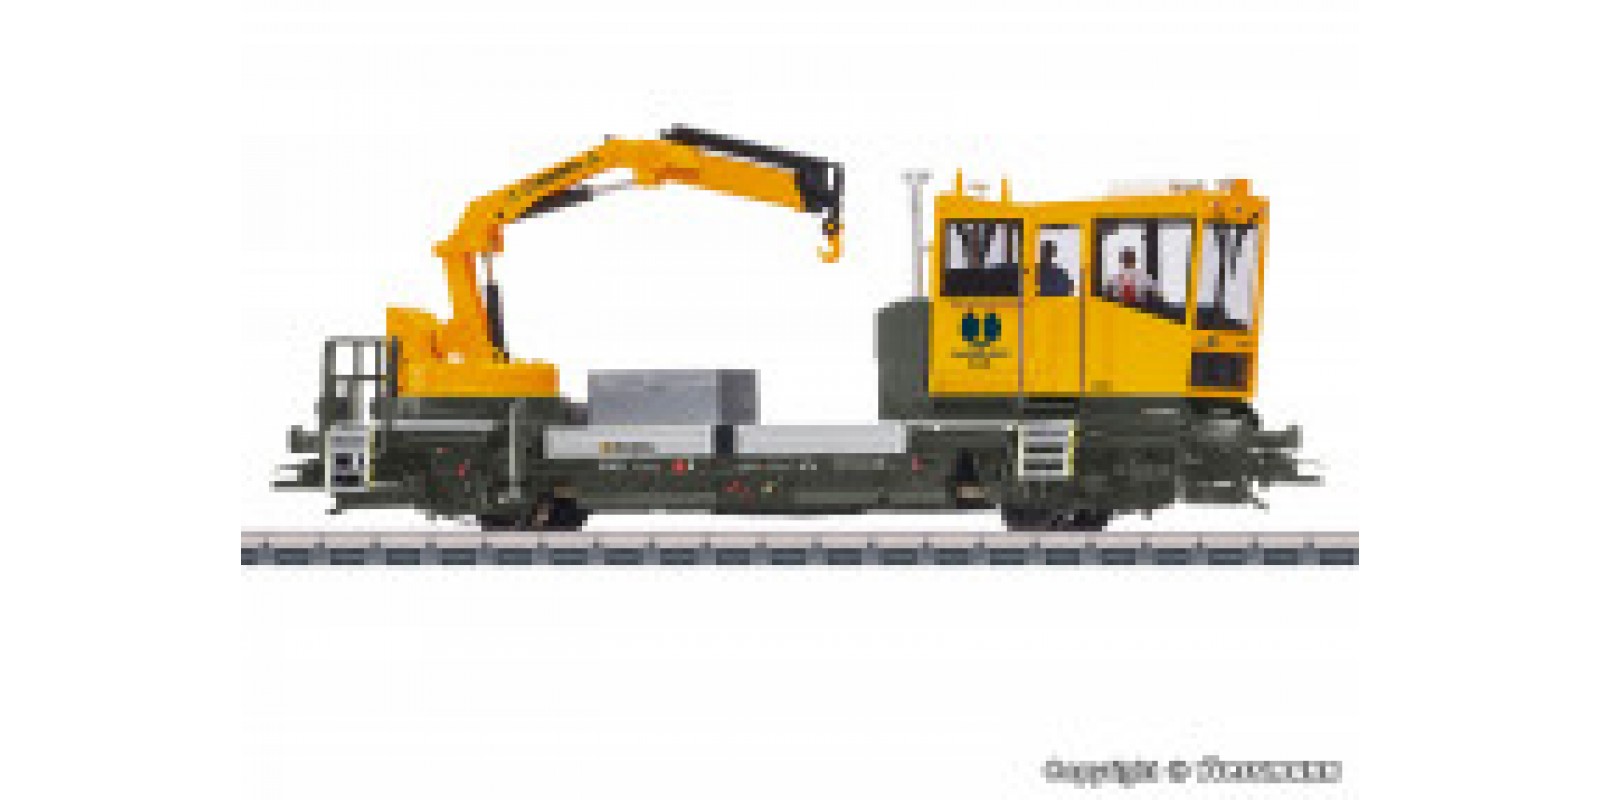 VI2629 H0 ROBEL Track motor car 54.22 Aarsleff version with motorized crane, functional model, 2 rail